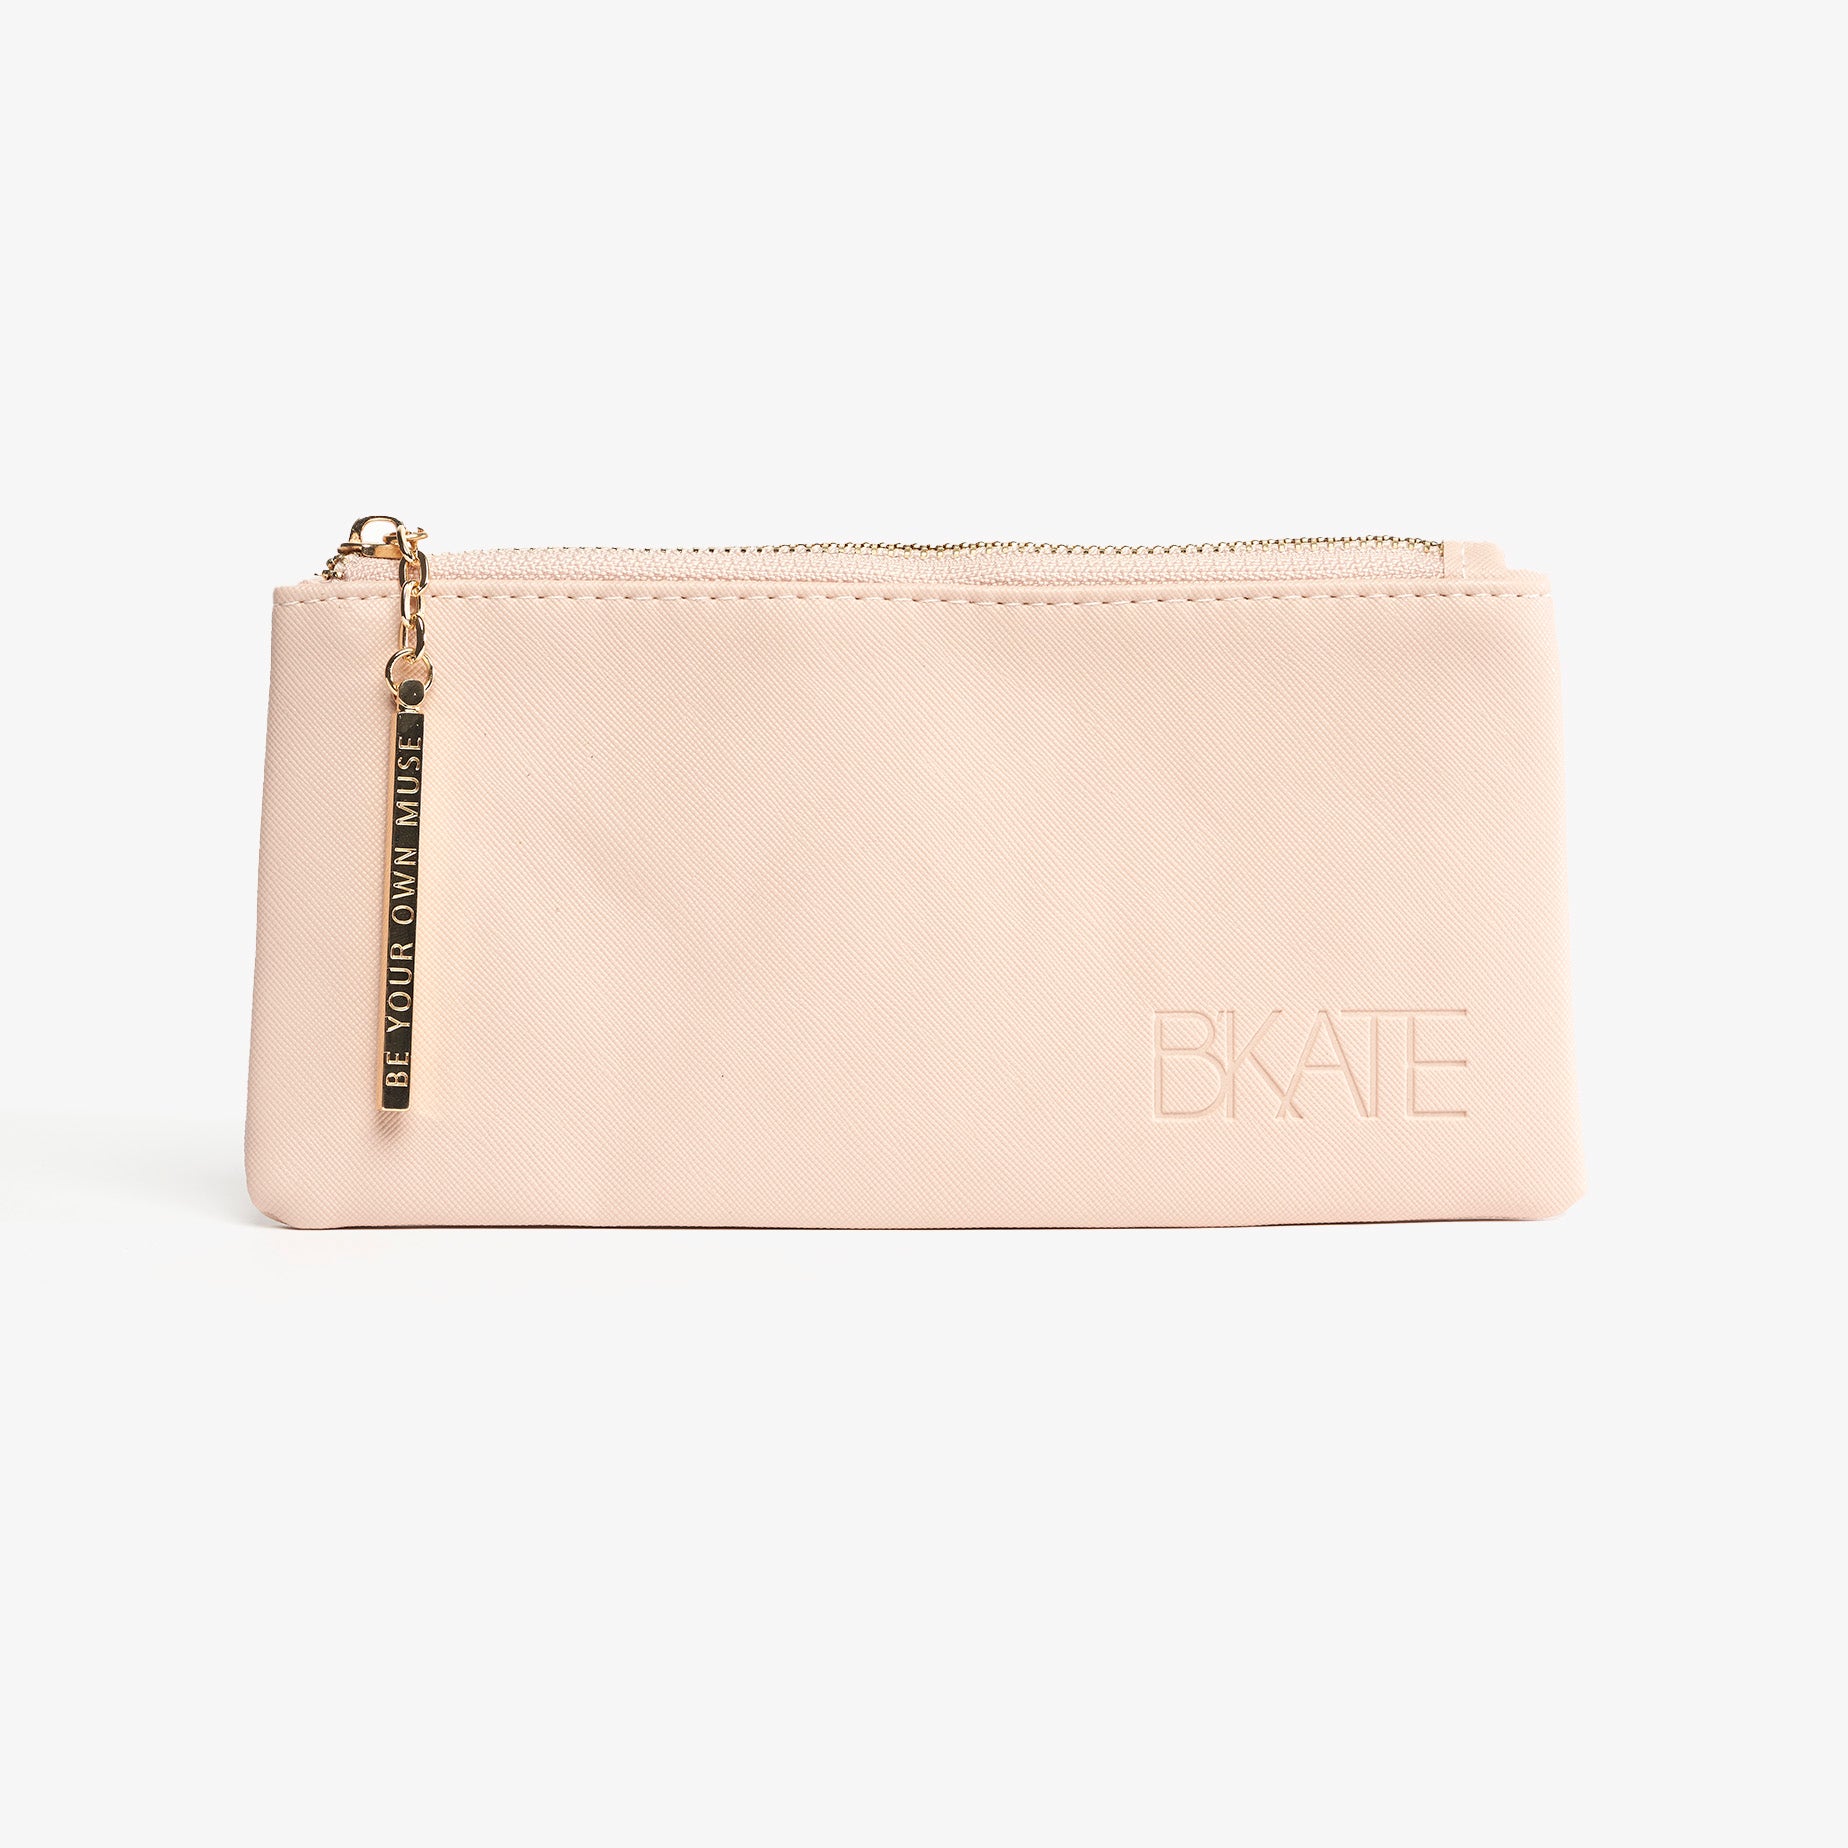 B'Kate Zip Bag | Pink Cosmetic Bag | Pouch Bag – B'kate Cosmetics